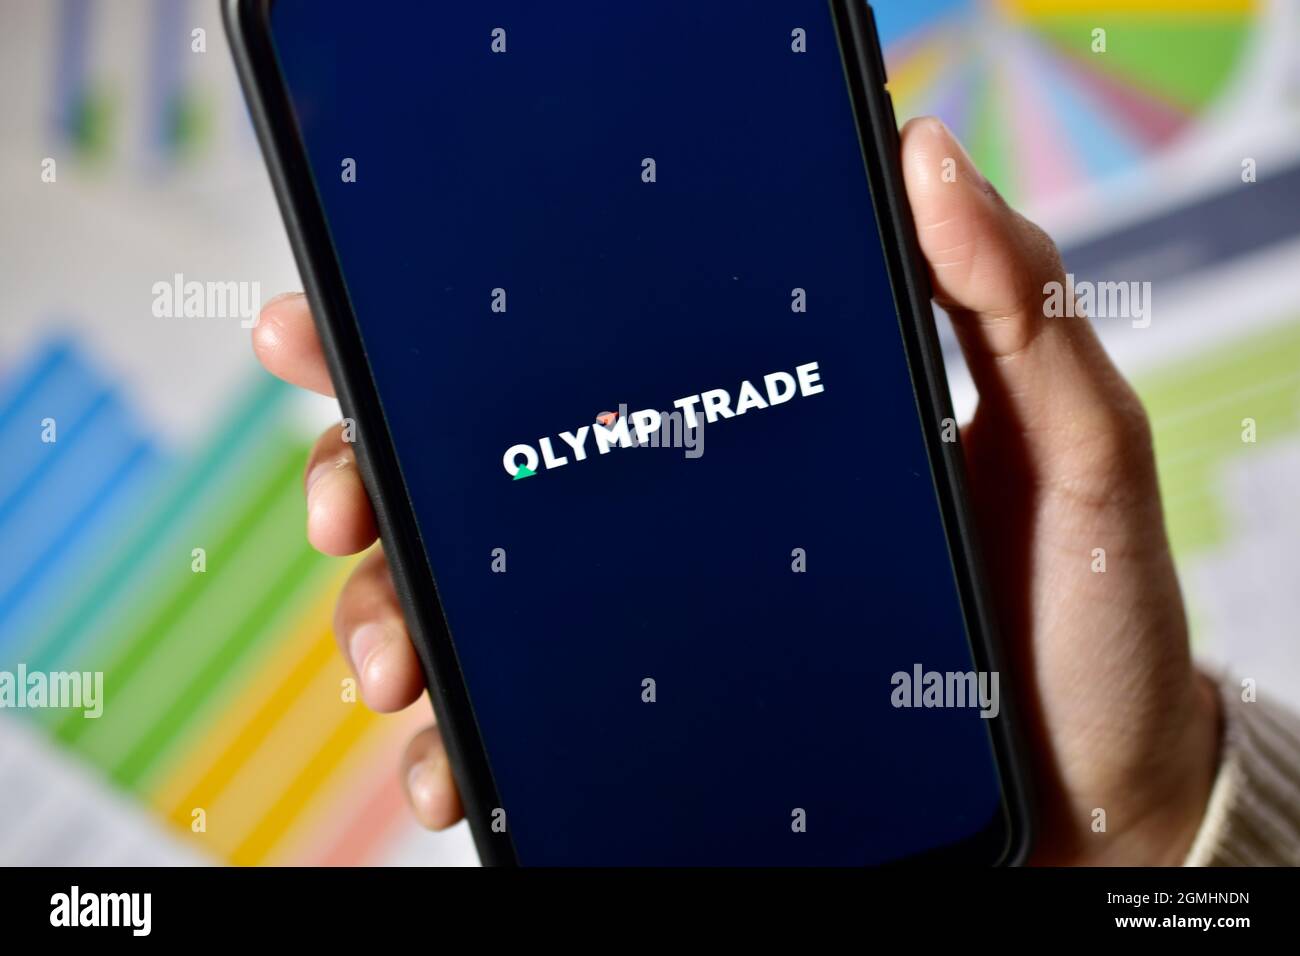 New Delhi, India, 12 January 2020:- Olymp Trade application on smartphone Stock Photo